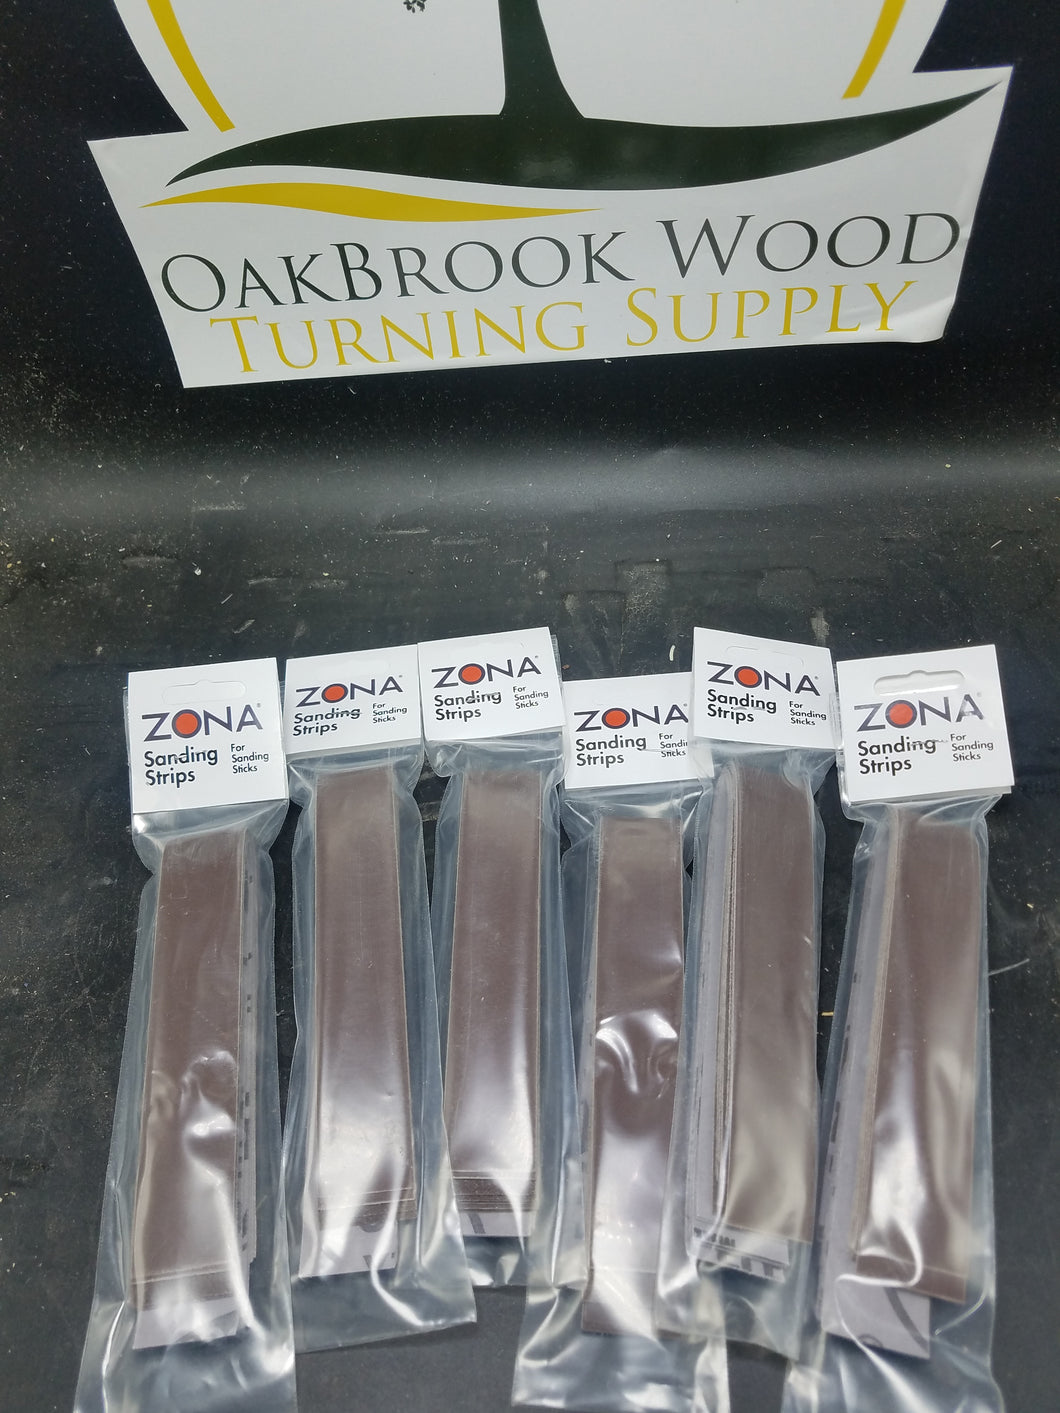 Zona sanding strips - Oakbrook Wood Turning Supply